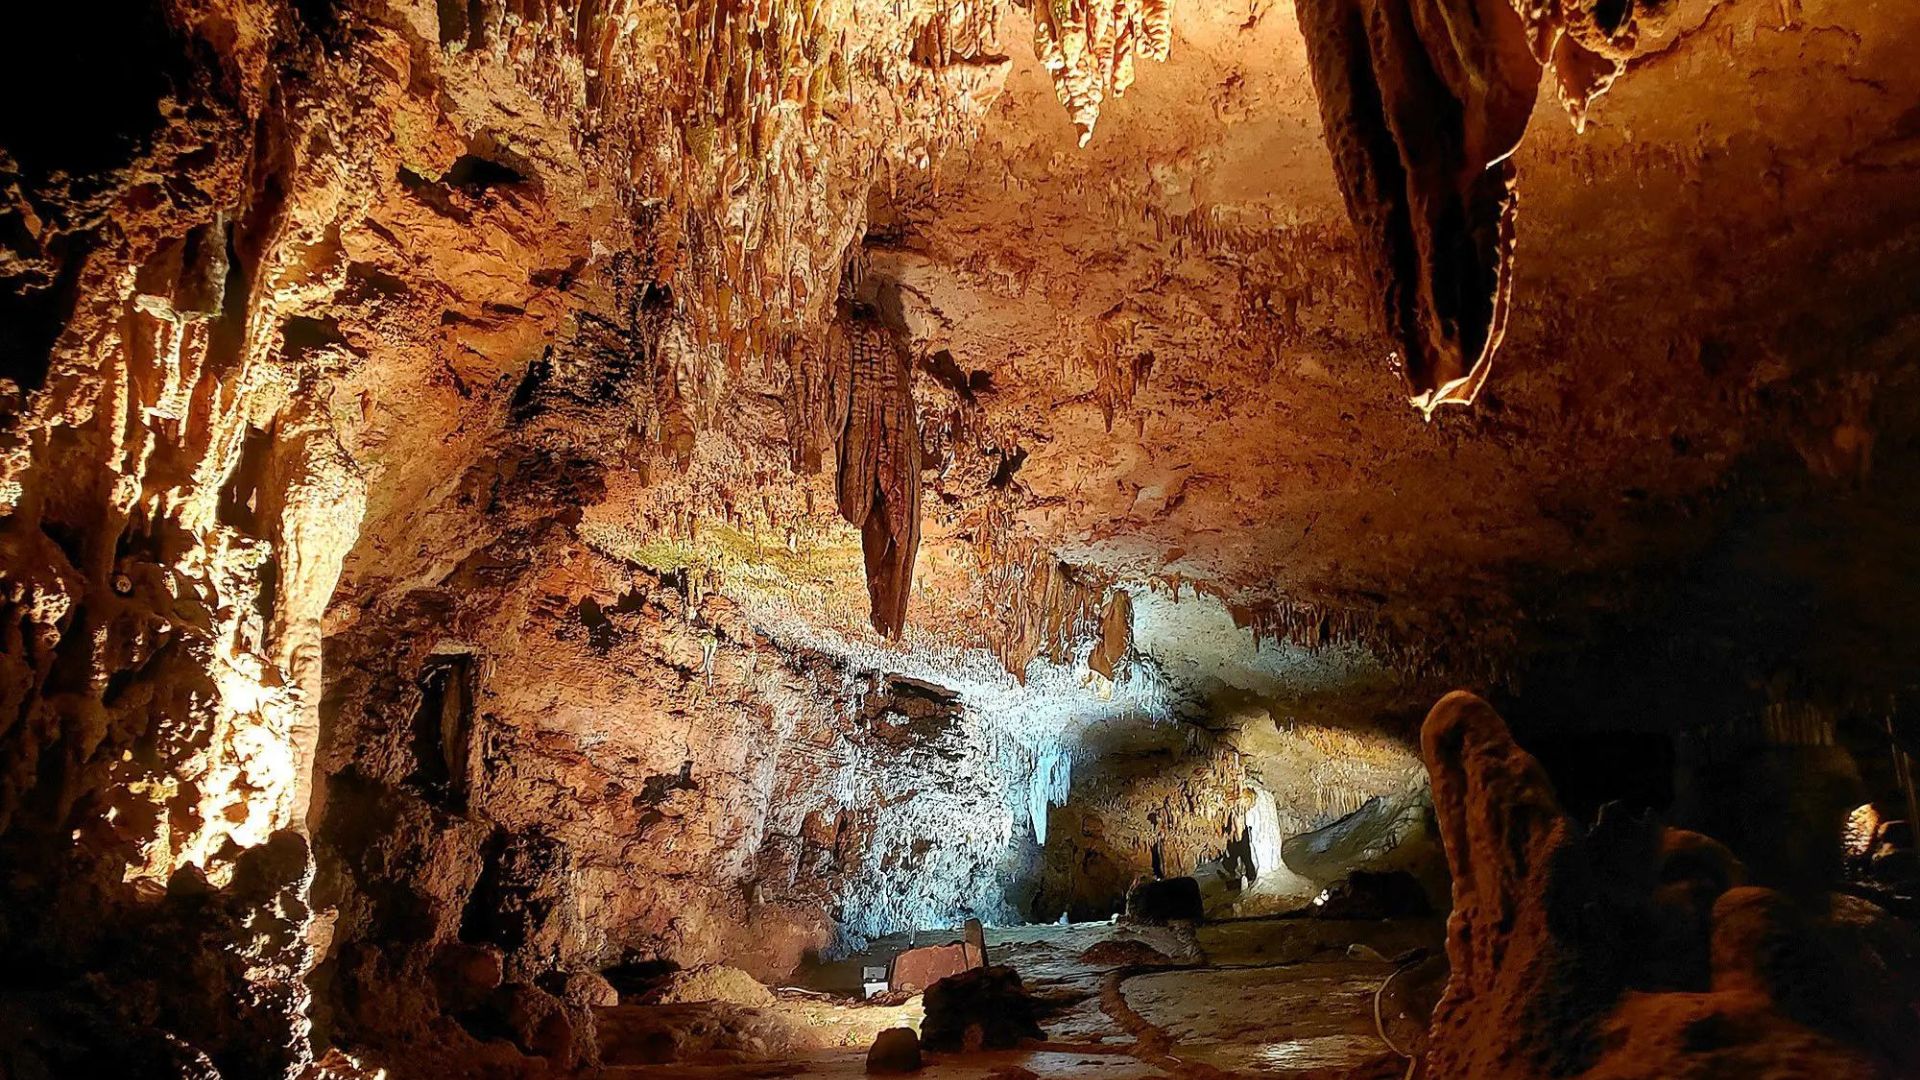 Meramec Caverns is the largest commercial cave in Missouri.